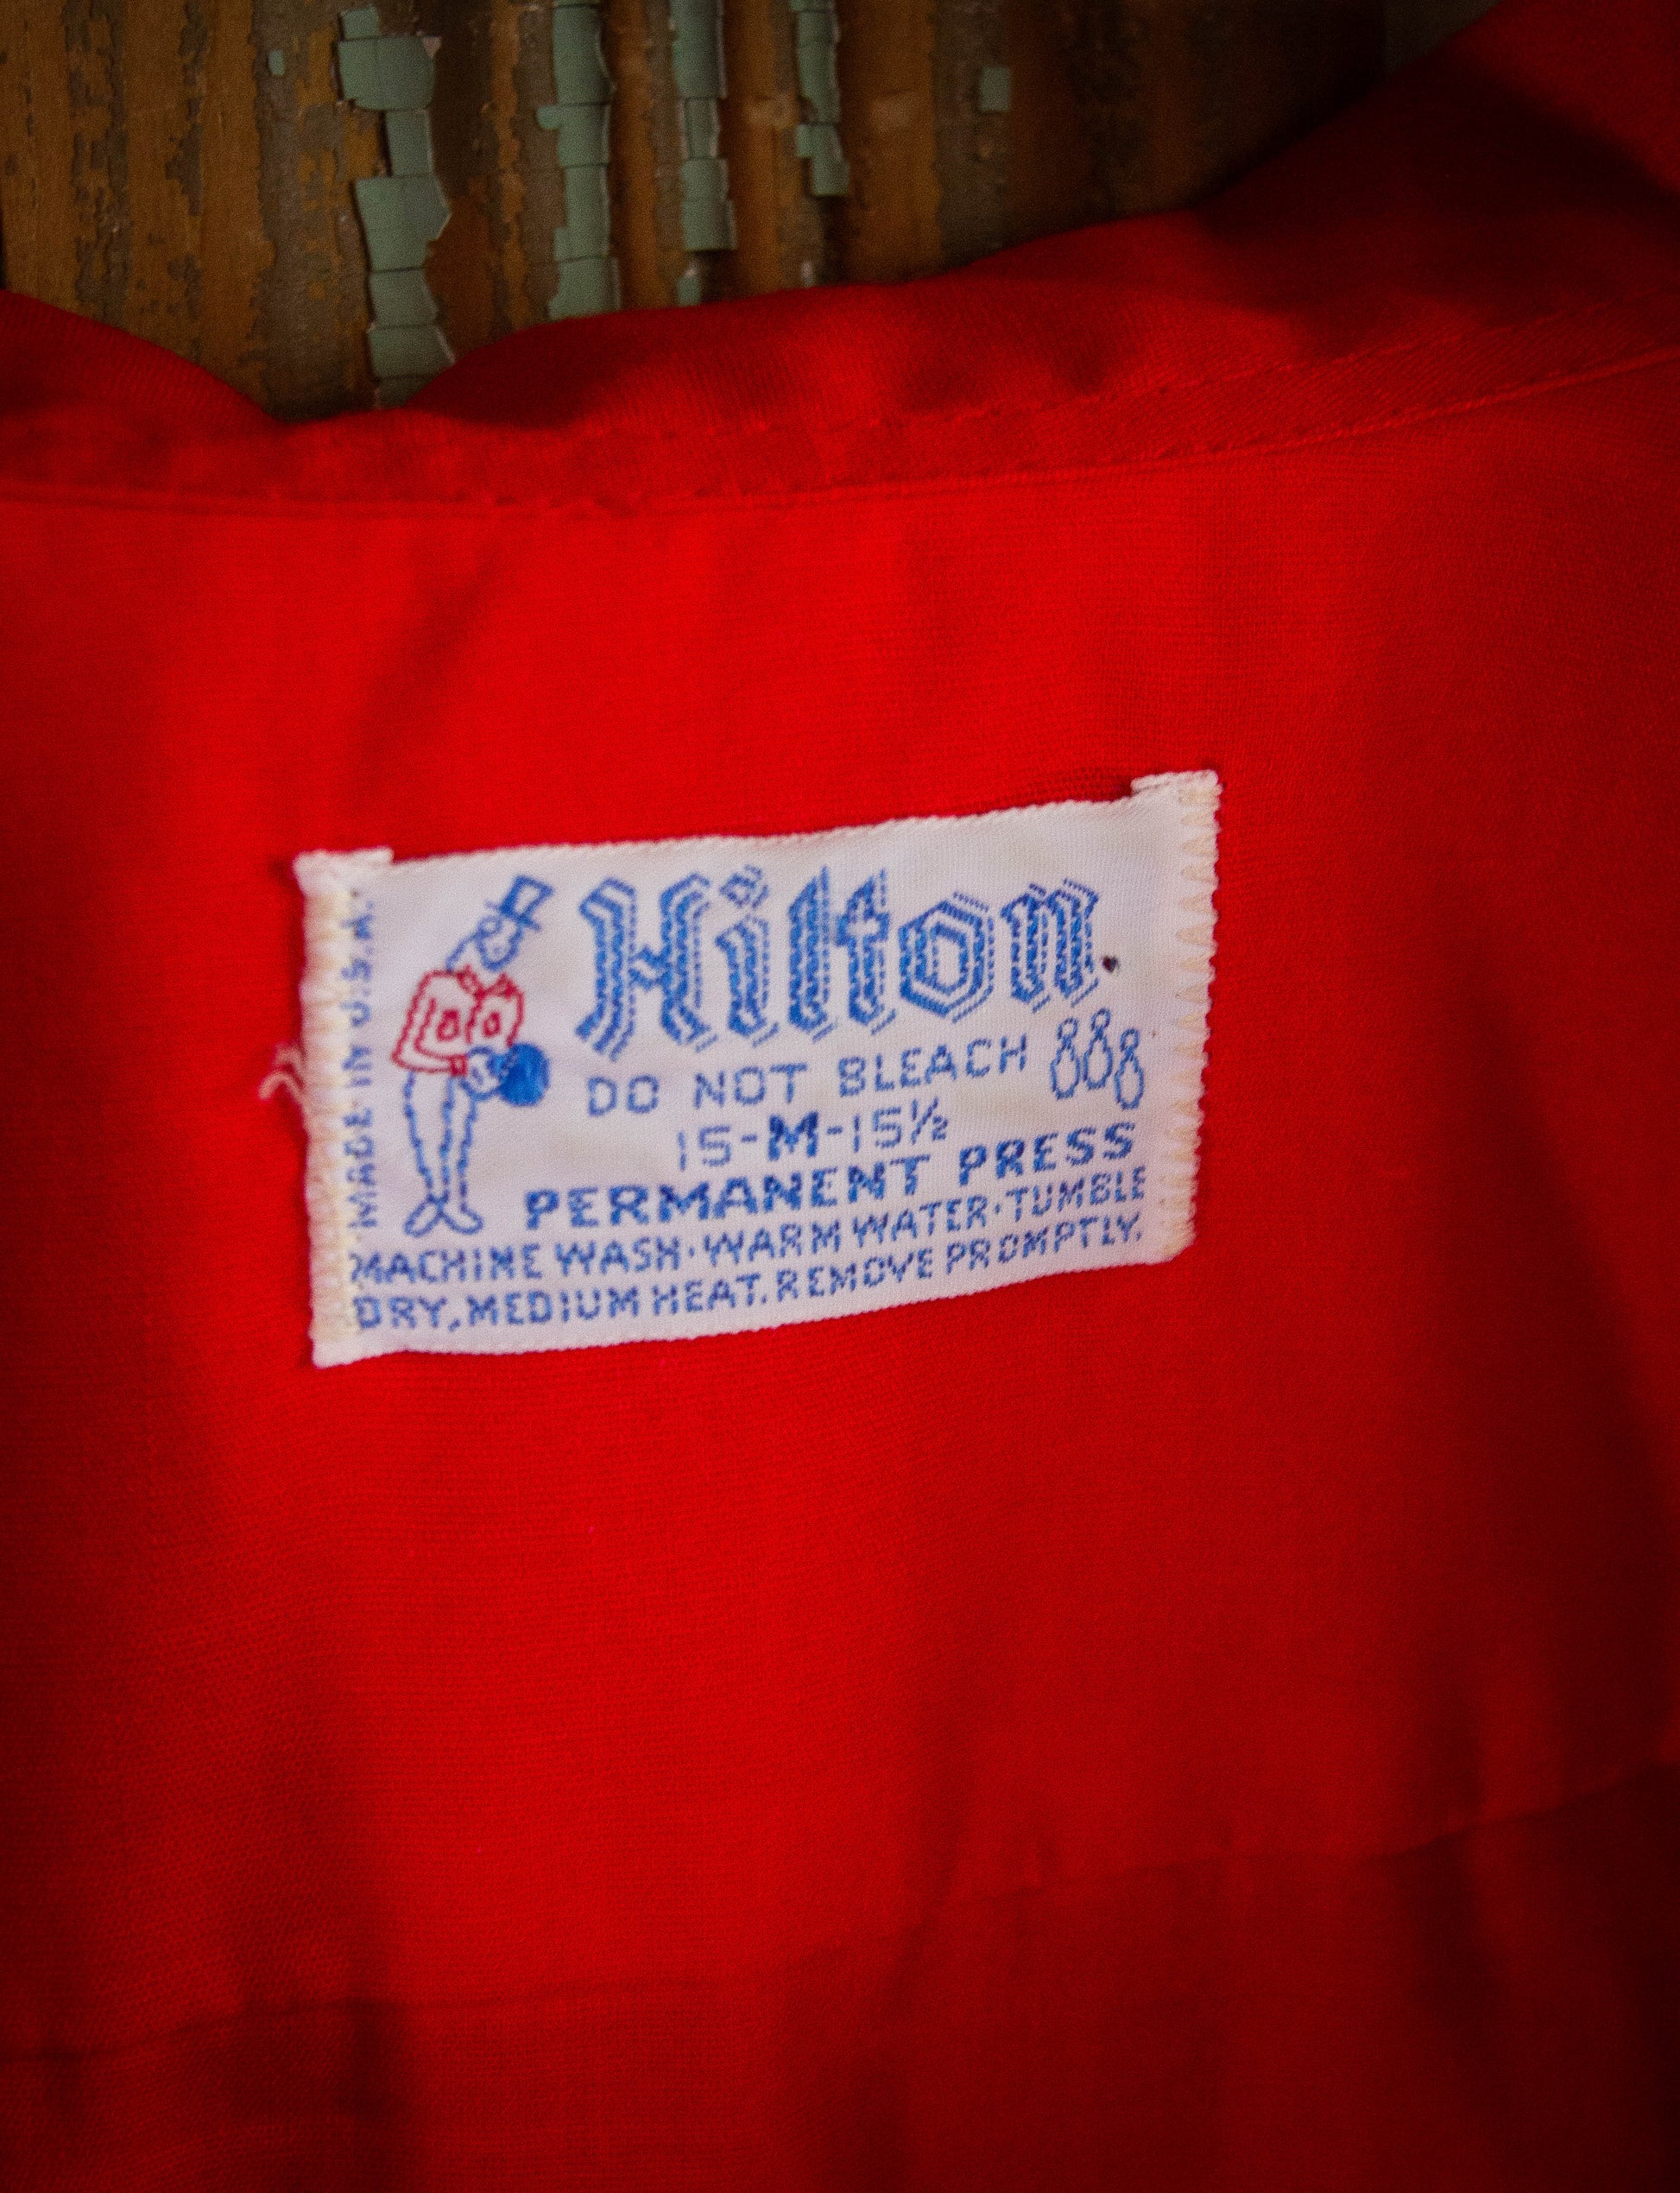 Vintage Hilton Better BILT Aluminum Bowling Shirt 60s Red Large